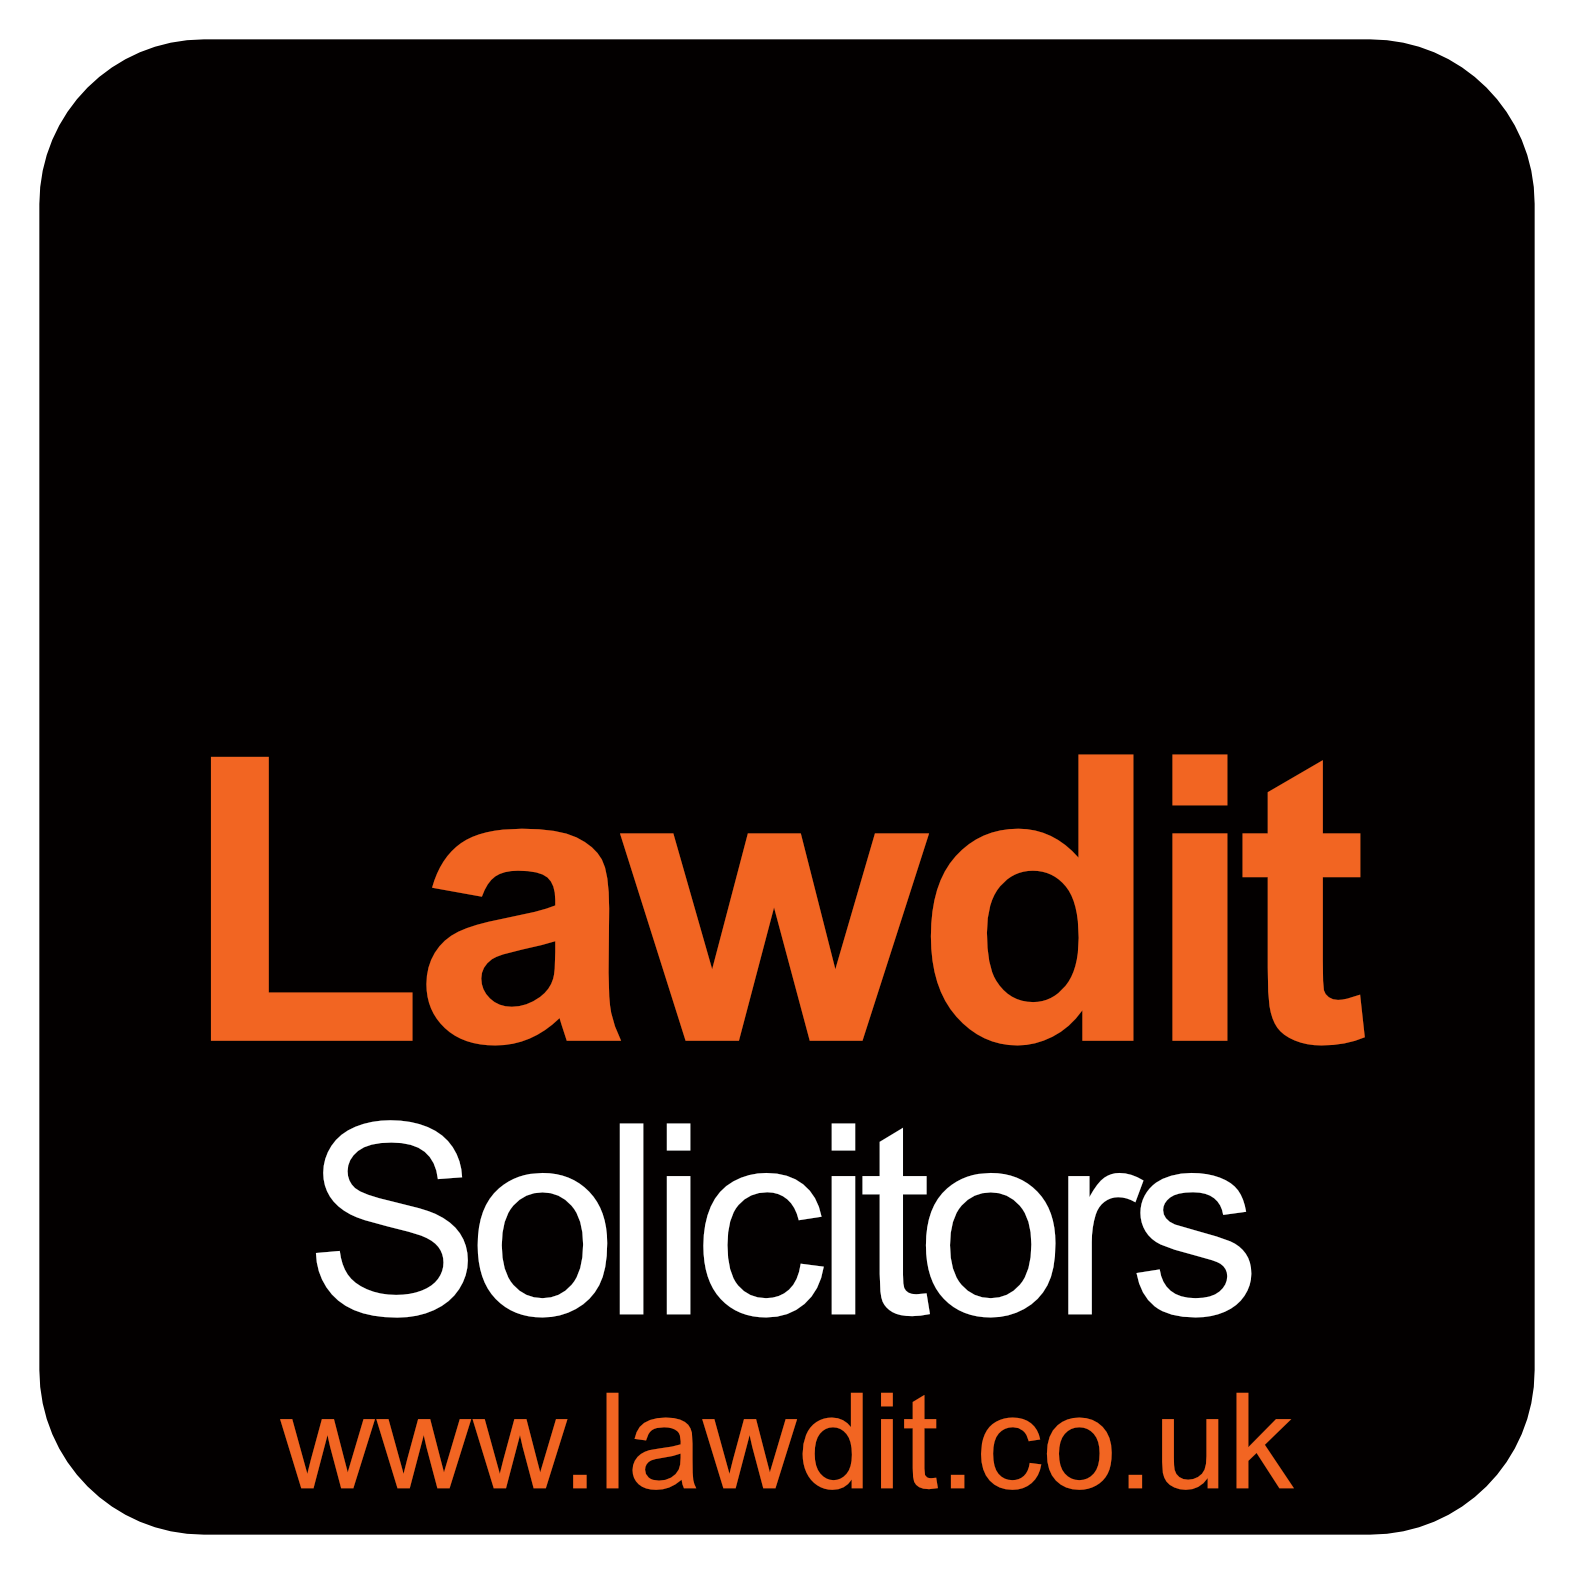 Lawdit Logo with website address